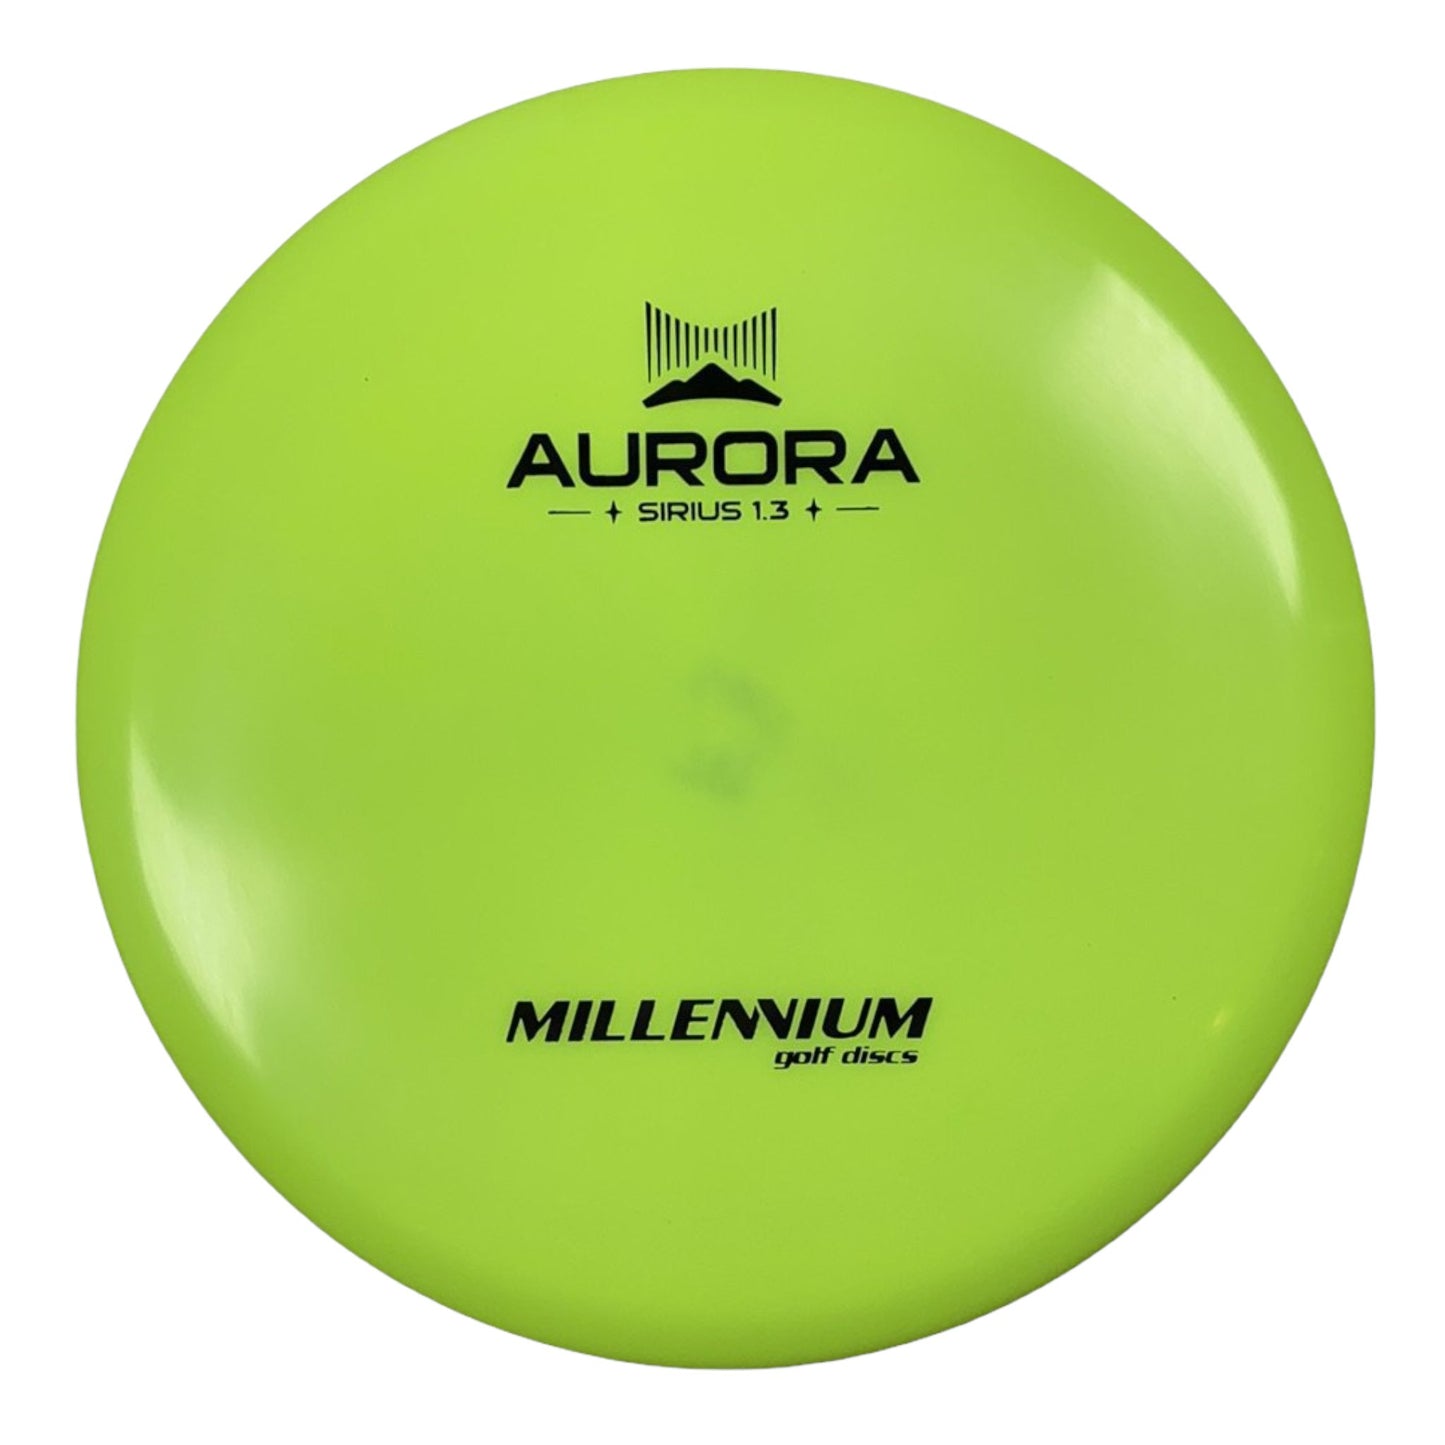 Millennium Golf Discs Aurora MS | Sirius | Neon/Black 172g Disc Golf